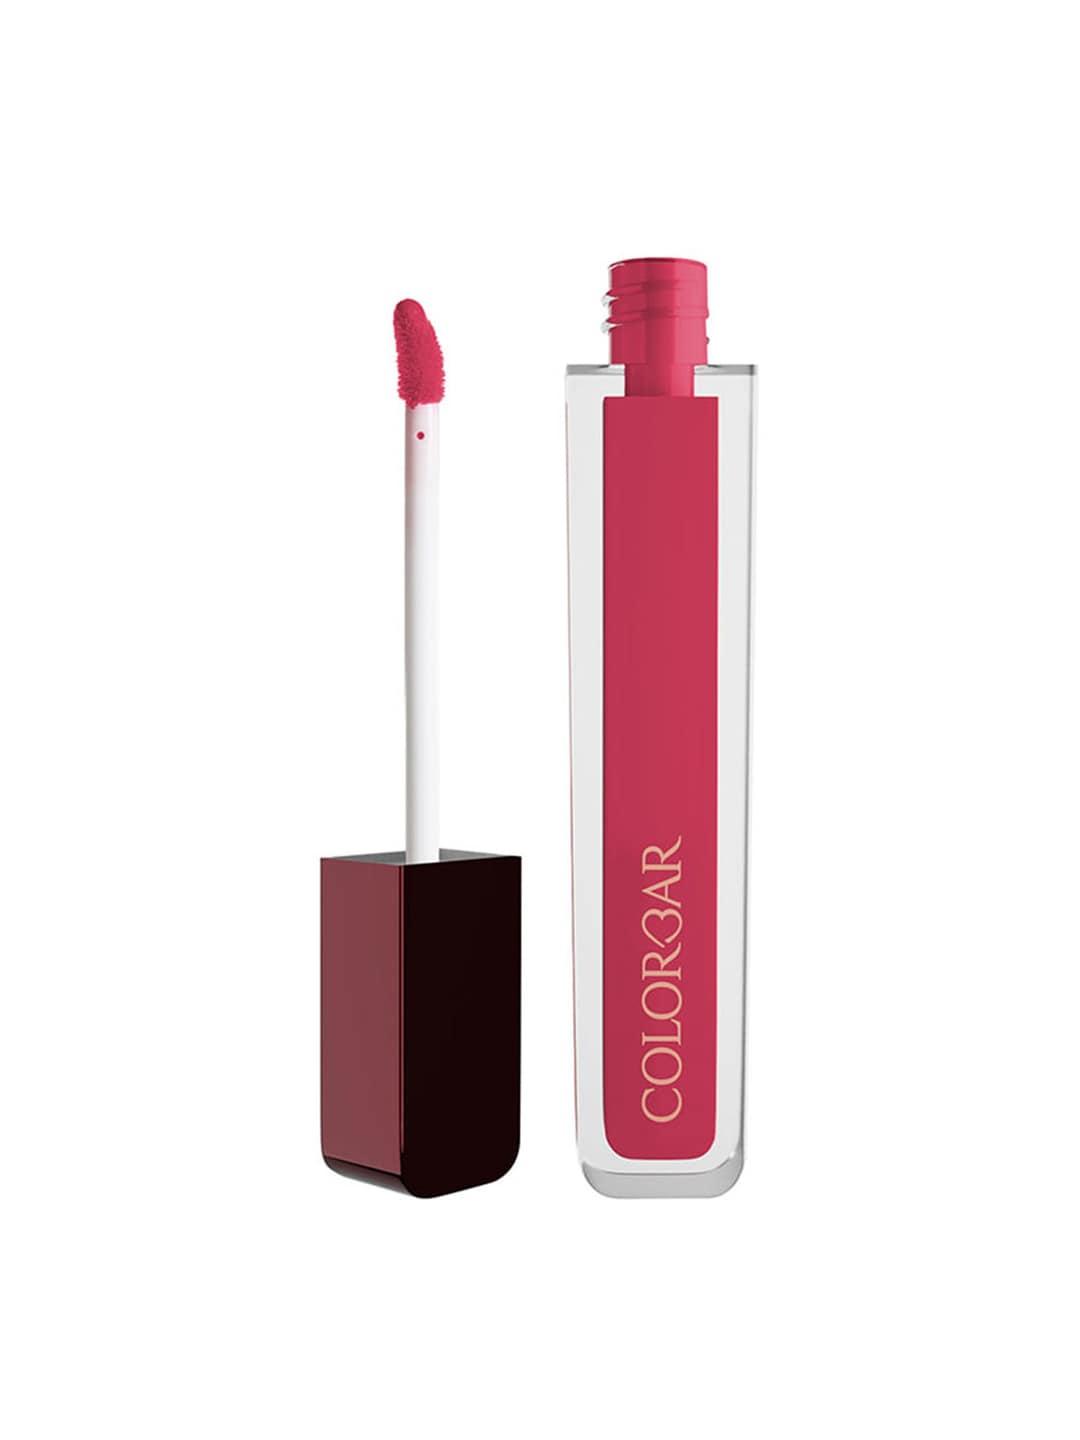 Colorbar PowerKiss Transfer Proof Vegan Matte Lip Color with Vitamin E 5 ml - Sassy Ride